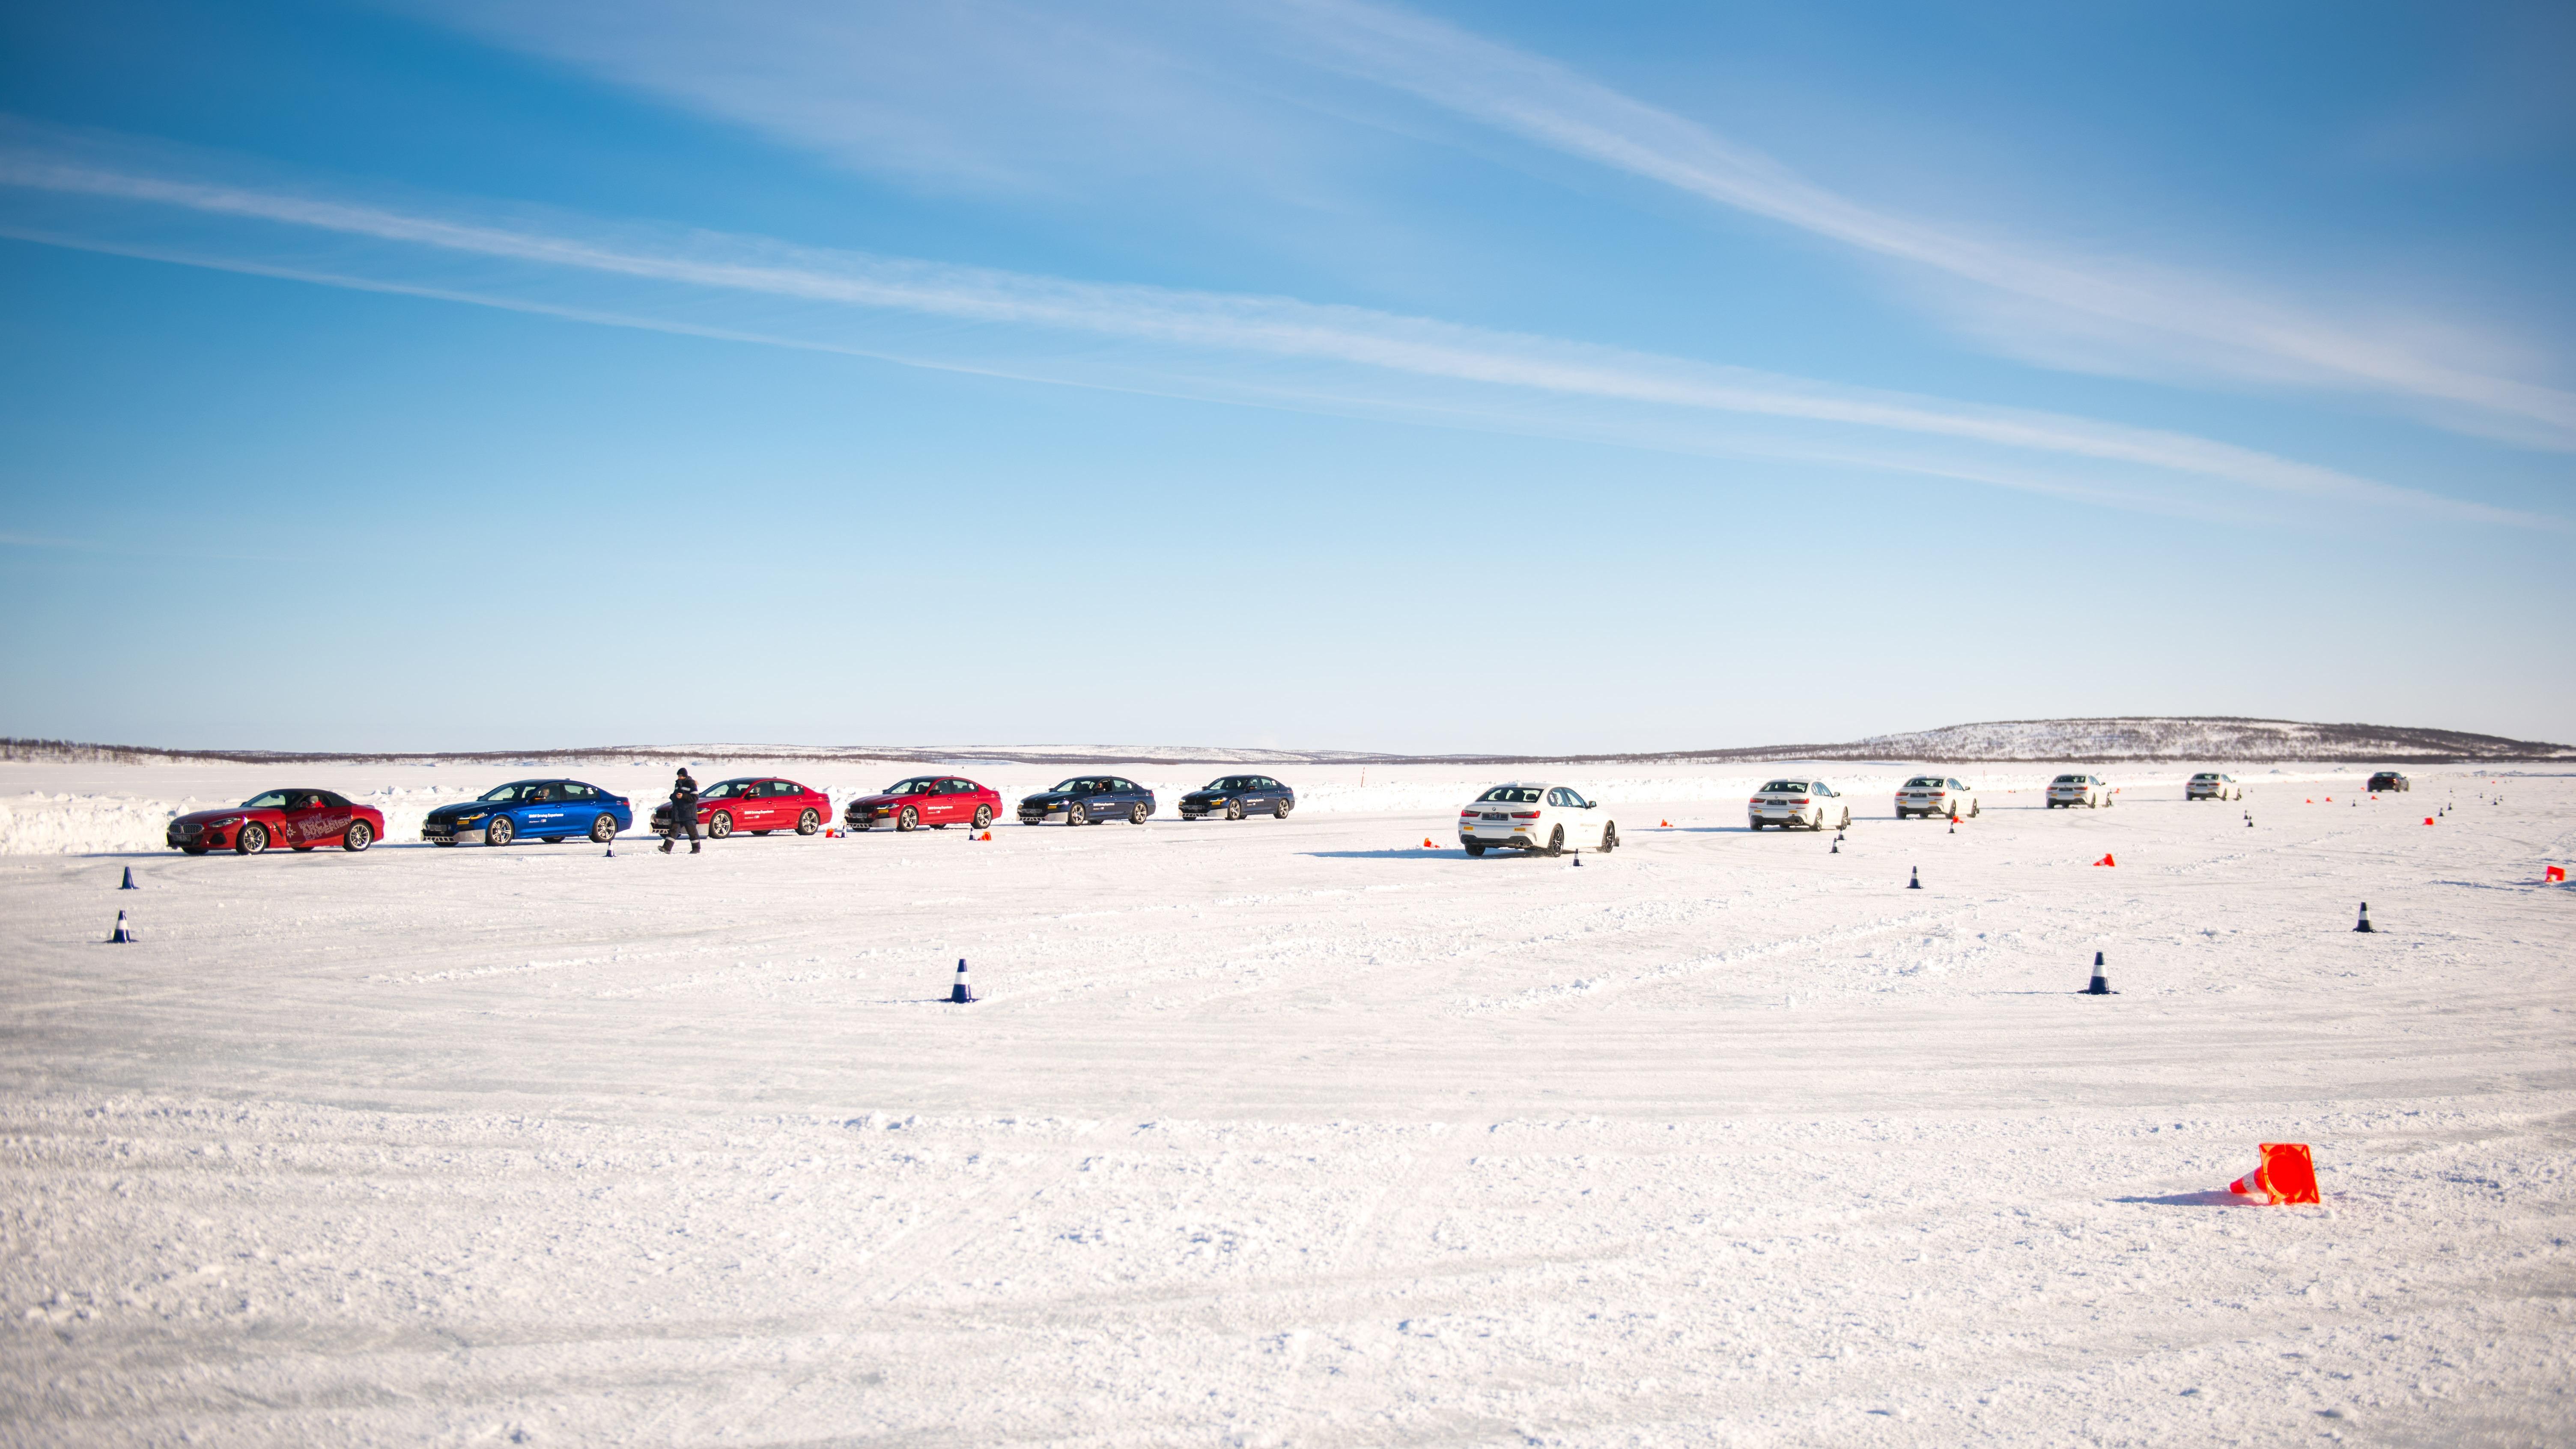 BMW Arctic Experience